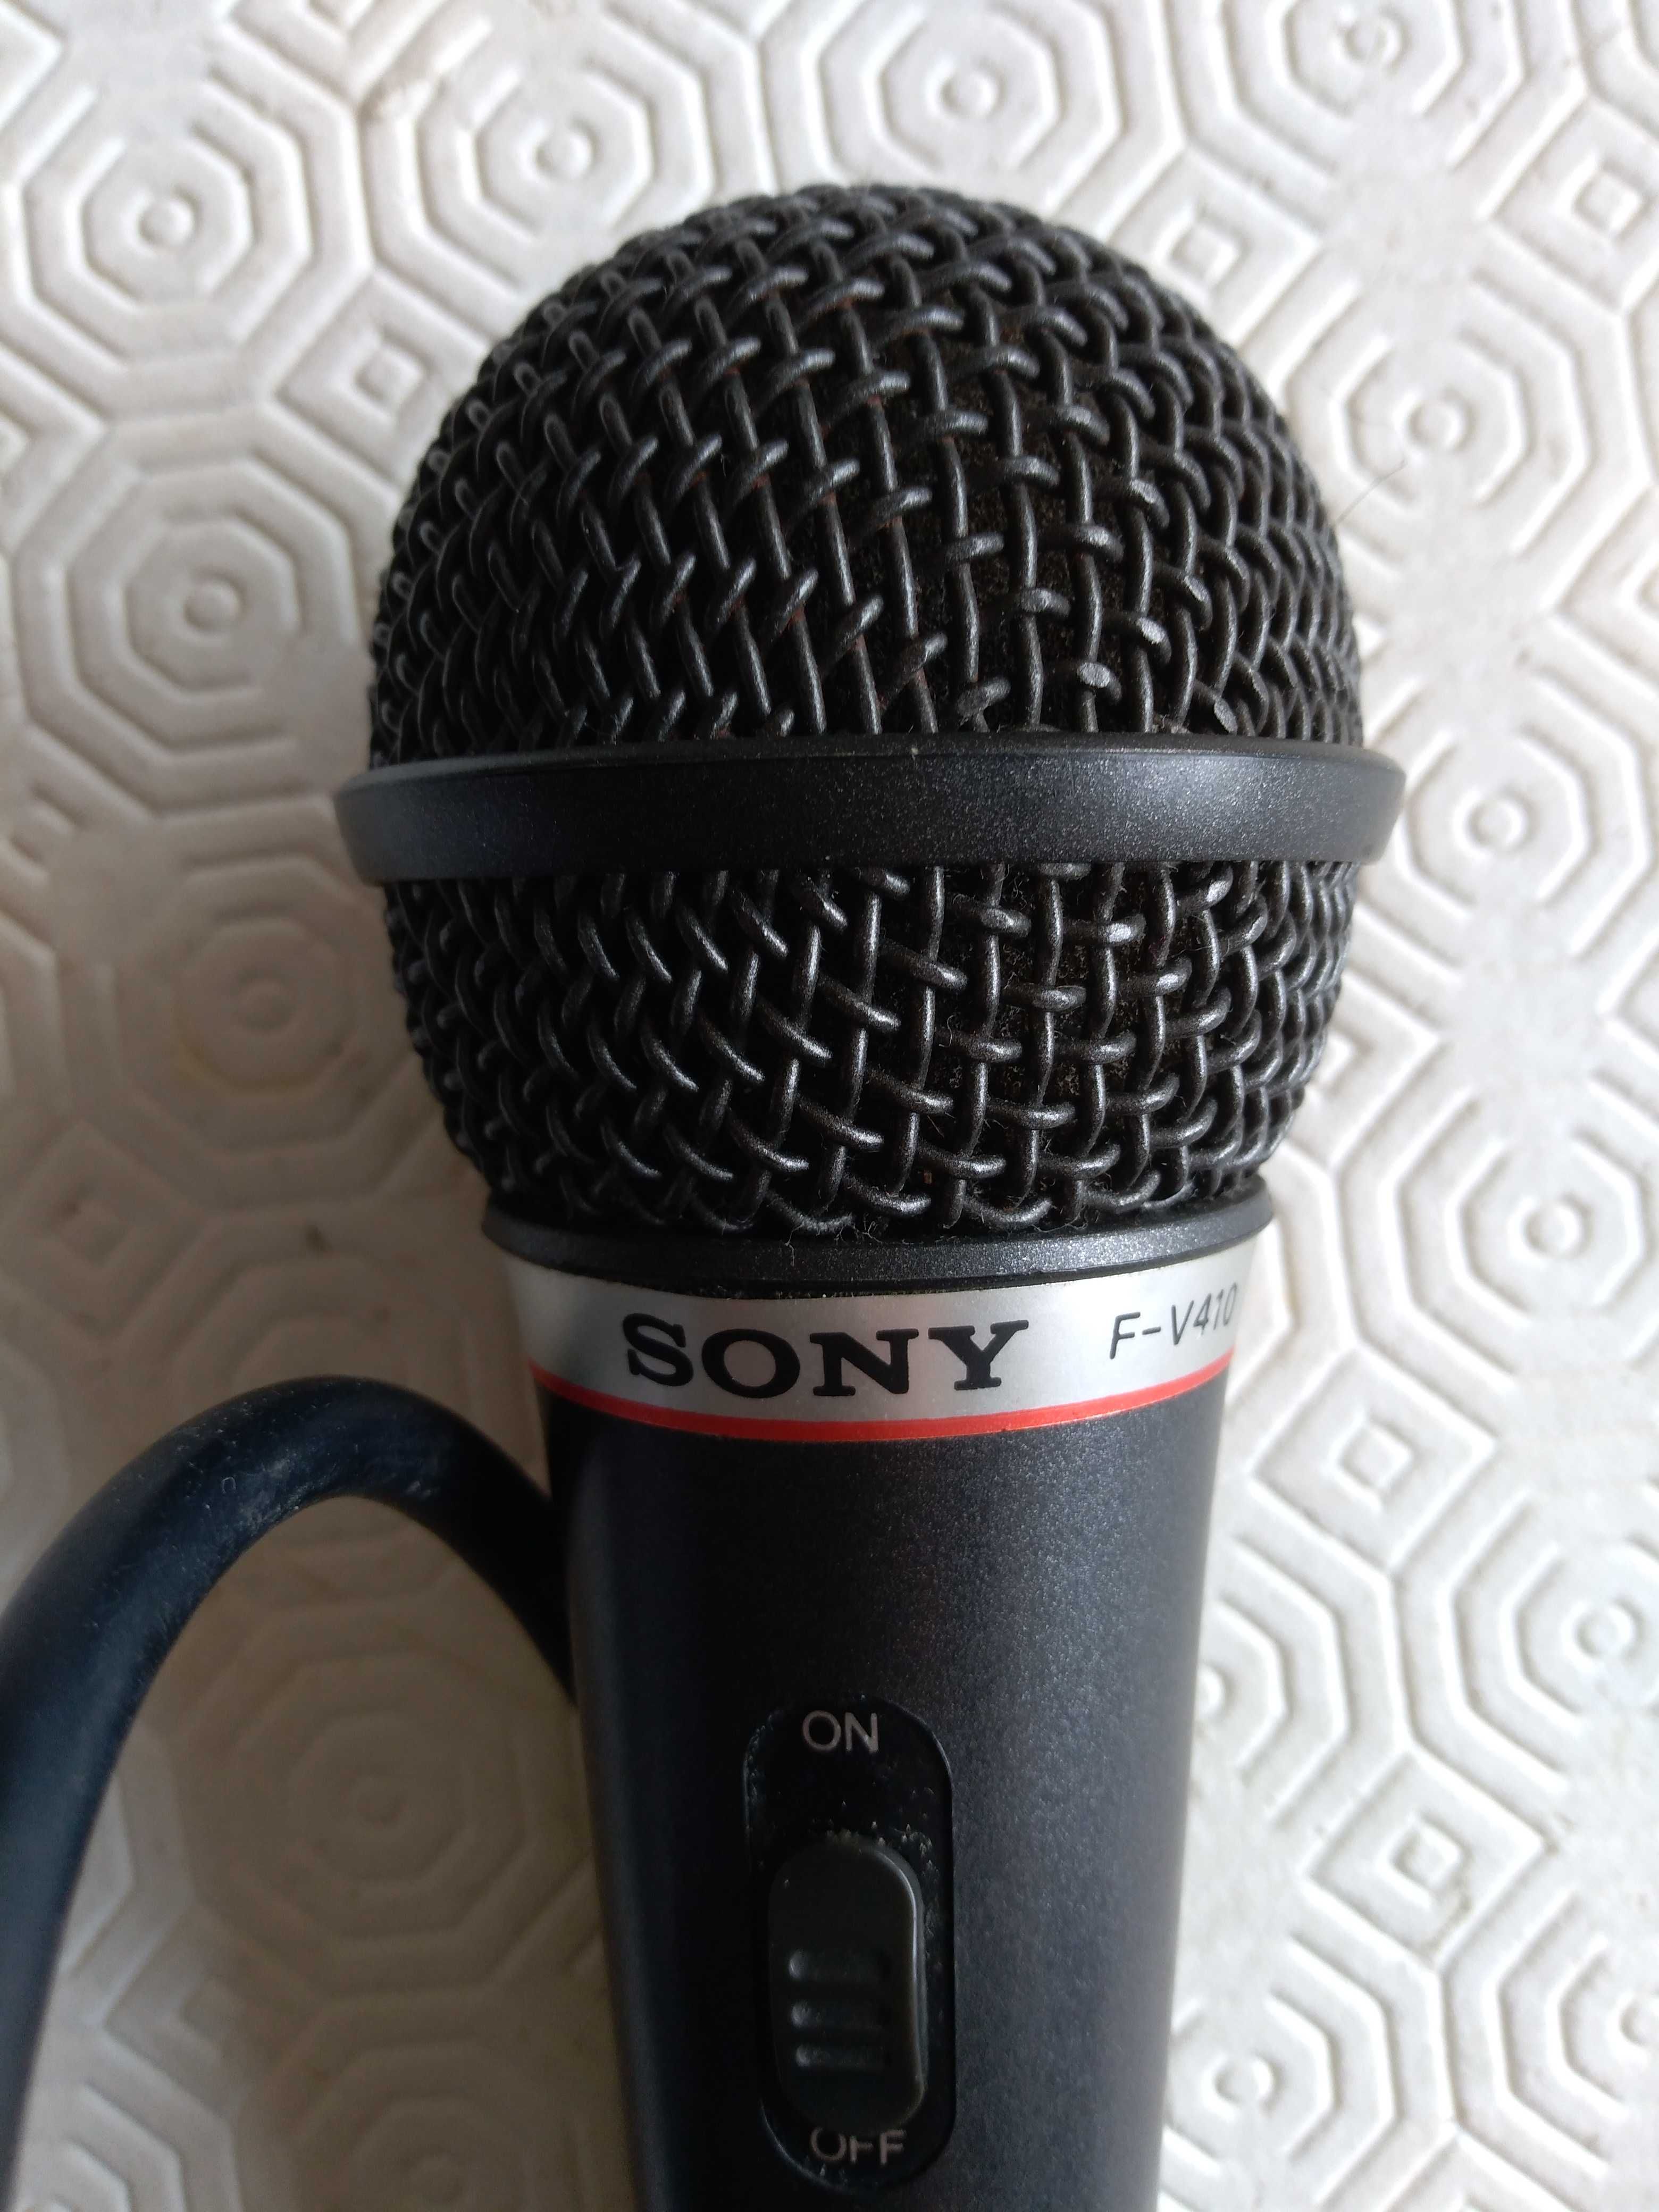 Microfone sony f-v410